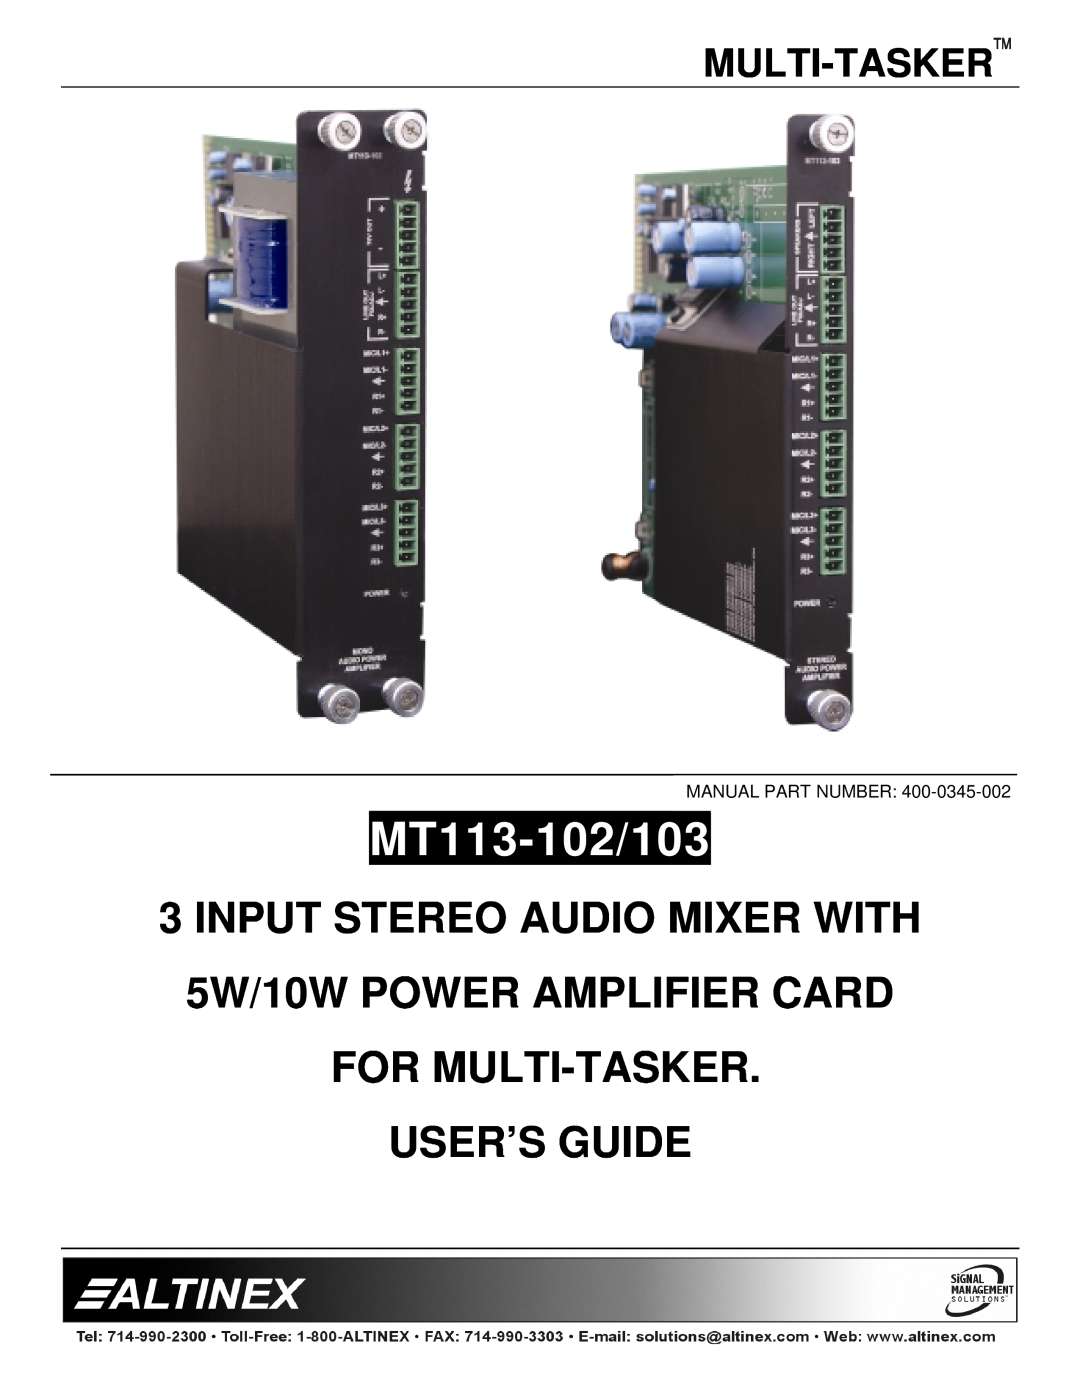 Altinex MT113-102/103 manual Multi-Tasker, User’S Guide 